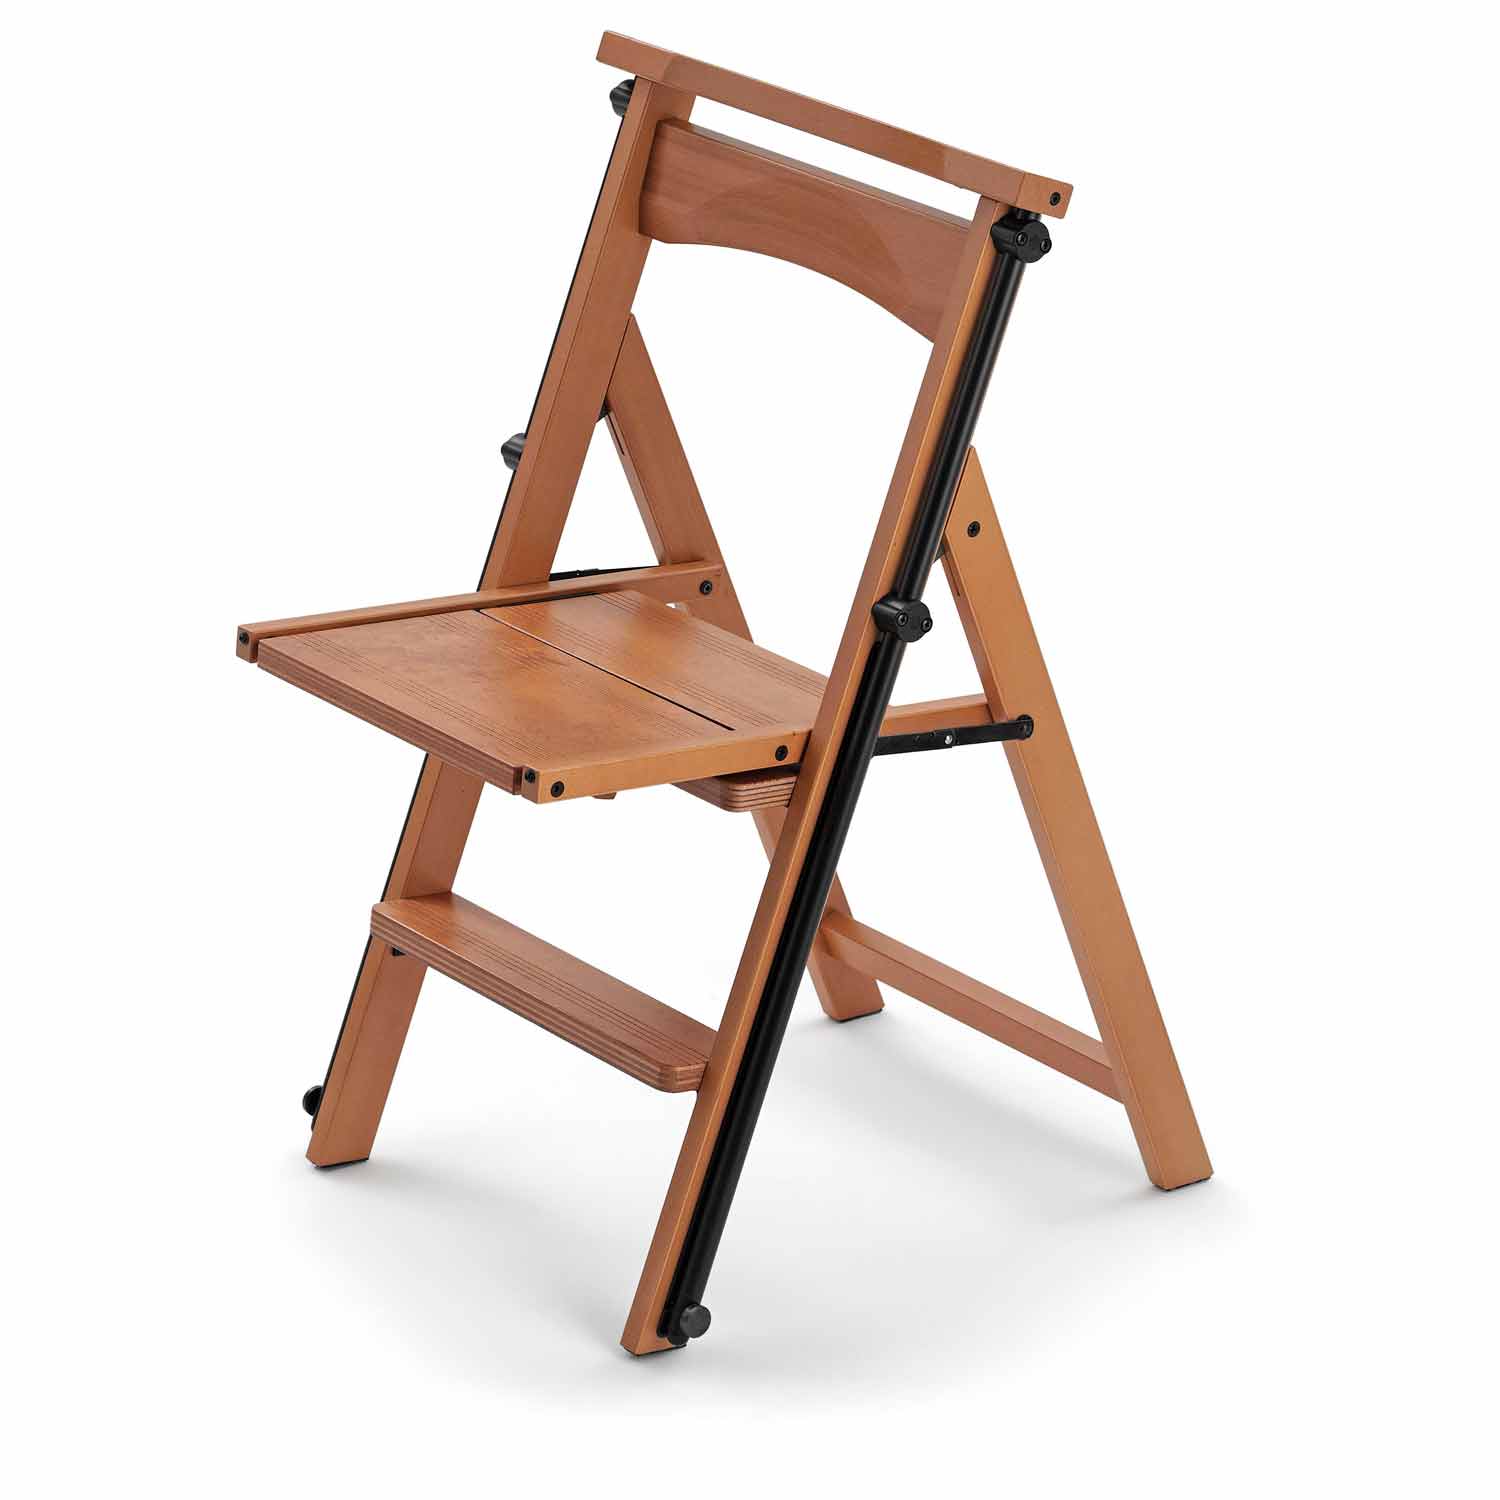 ELETTA - Silla Escalera, escalera de madera plegable, soportar hasta 100 kg, taburete escalera plegable